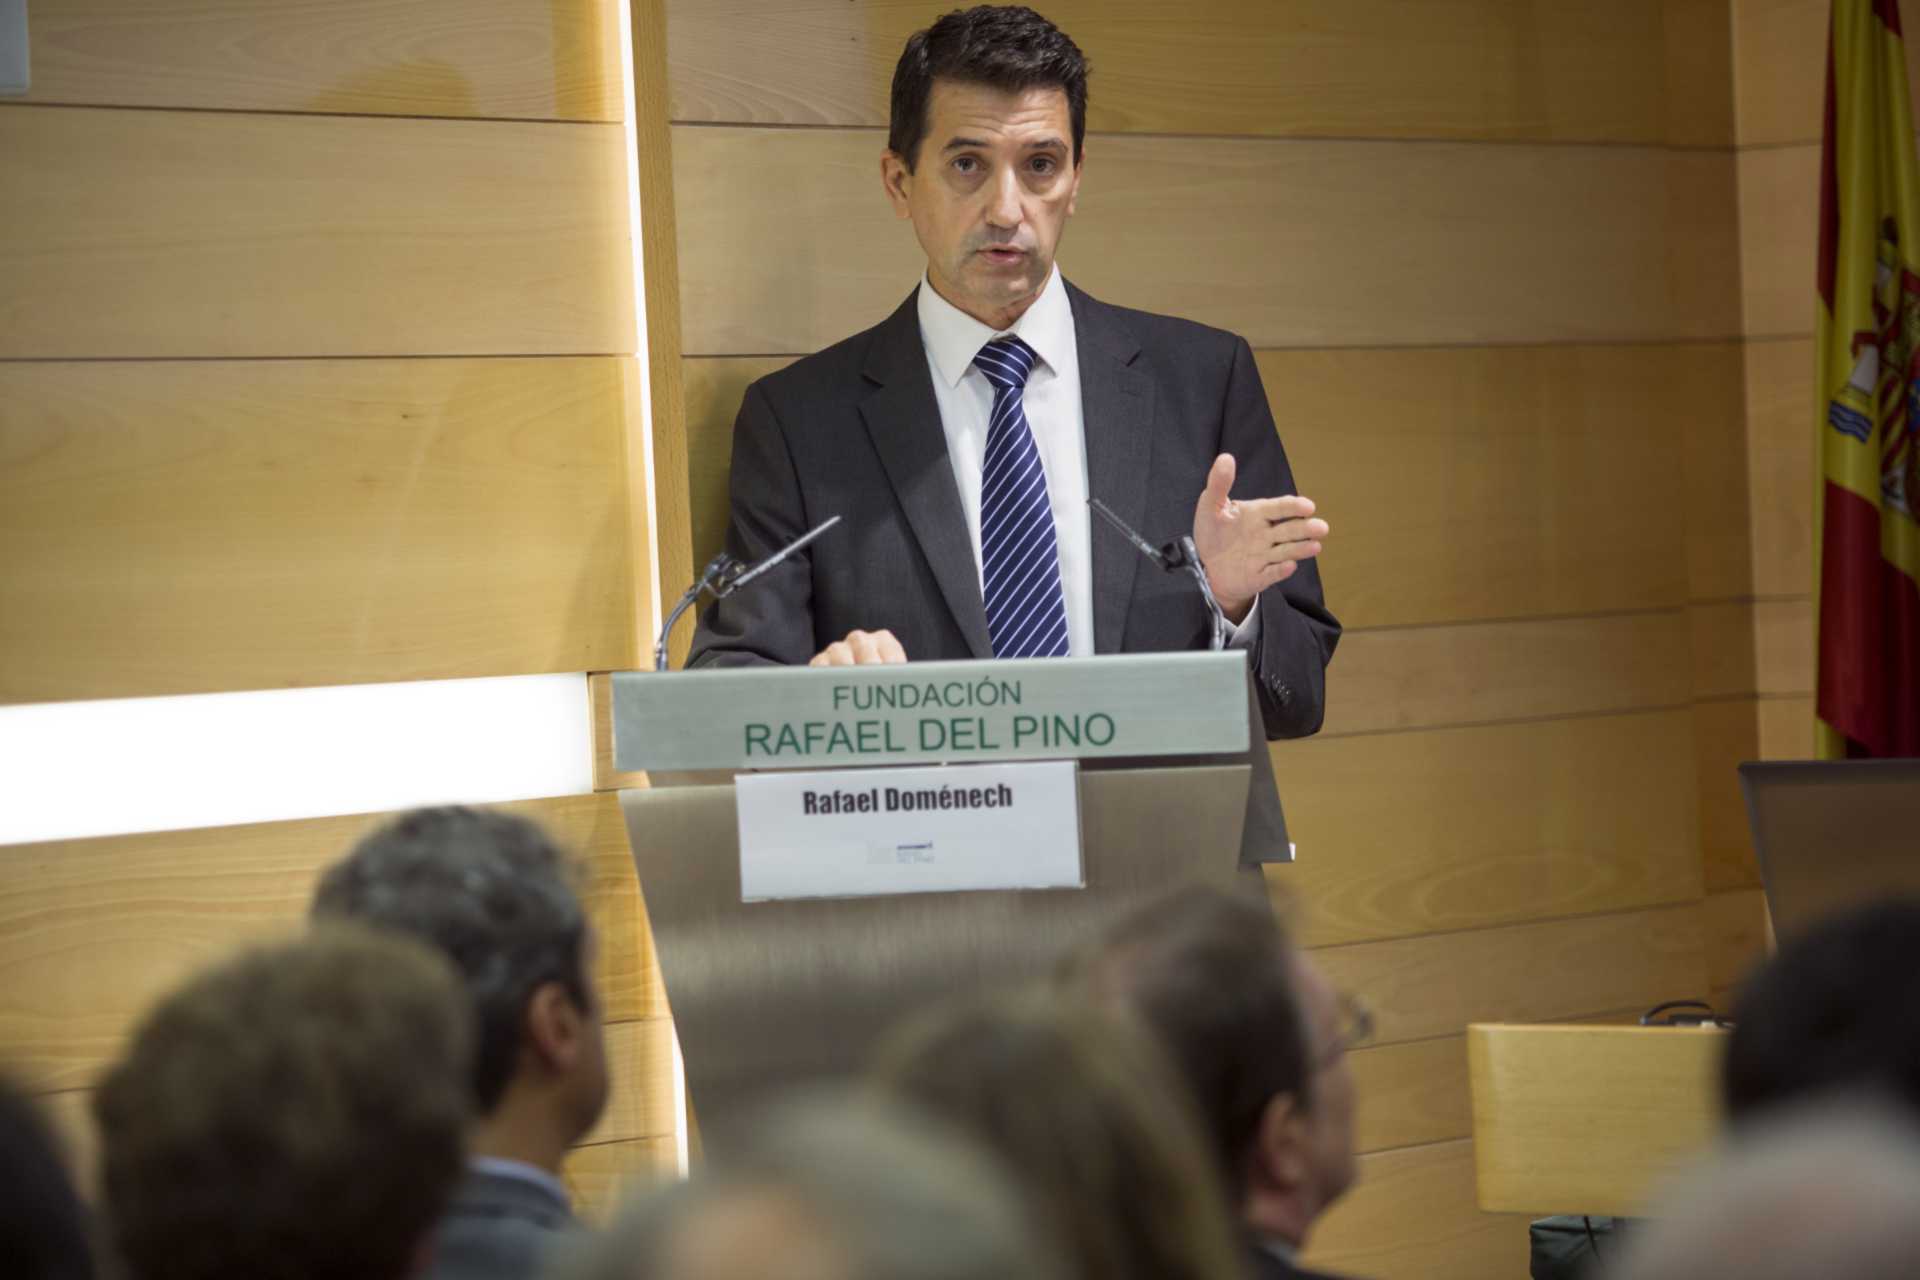 Macroeconomic modelling and analysis of the Spanish economy